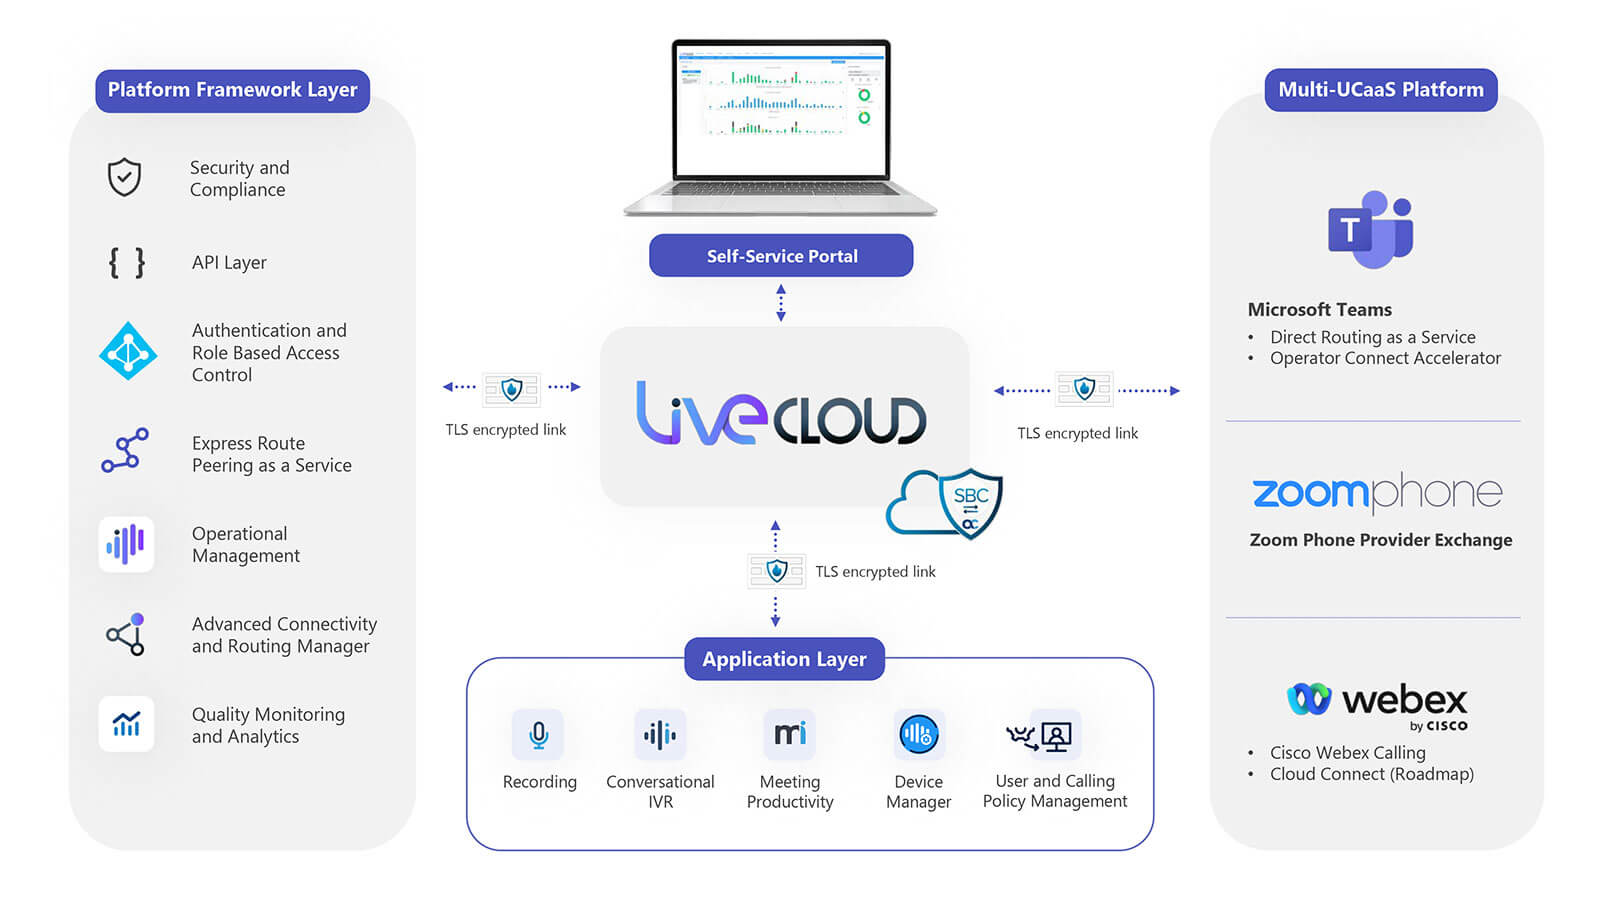 AudioCodes Live Cloud Solution - Architecture and Design